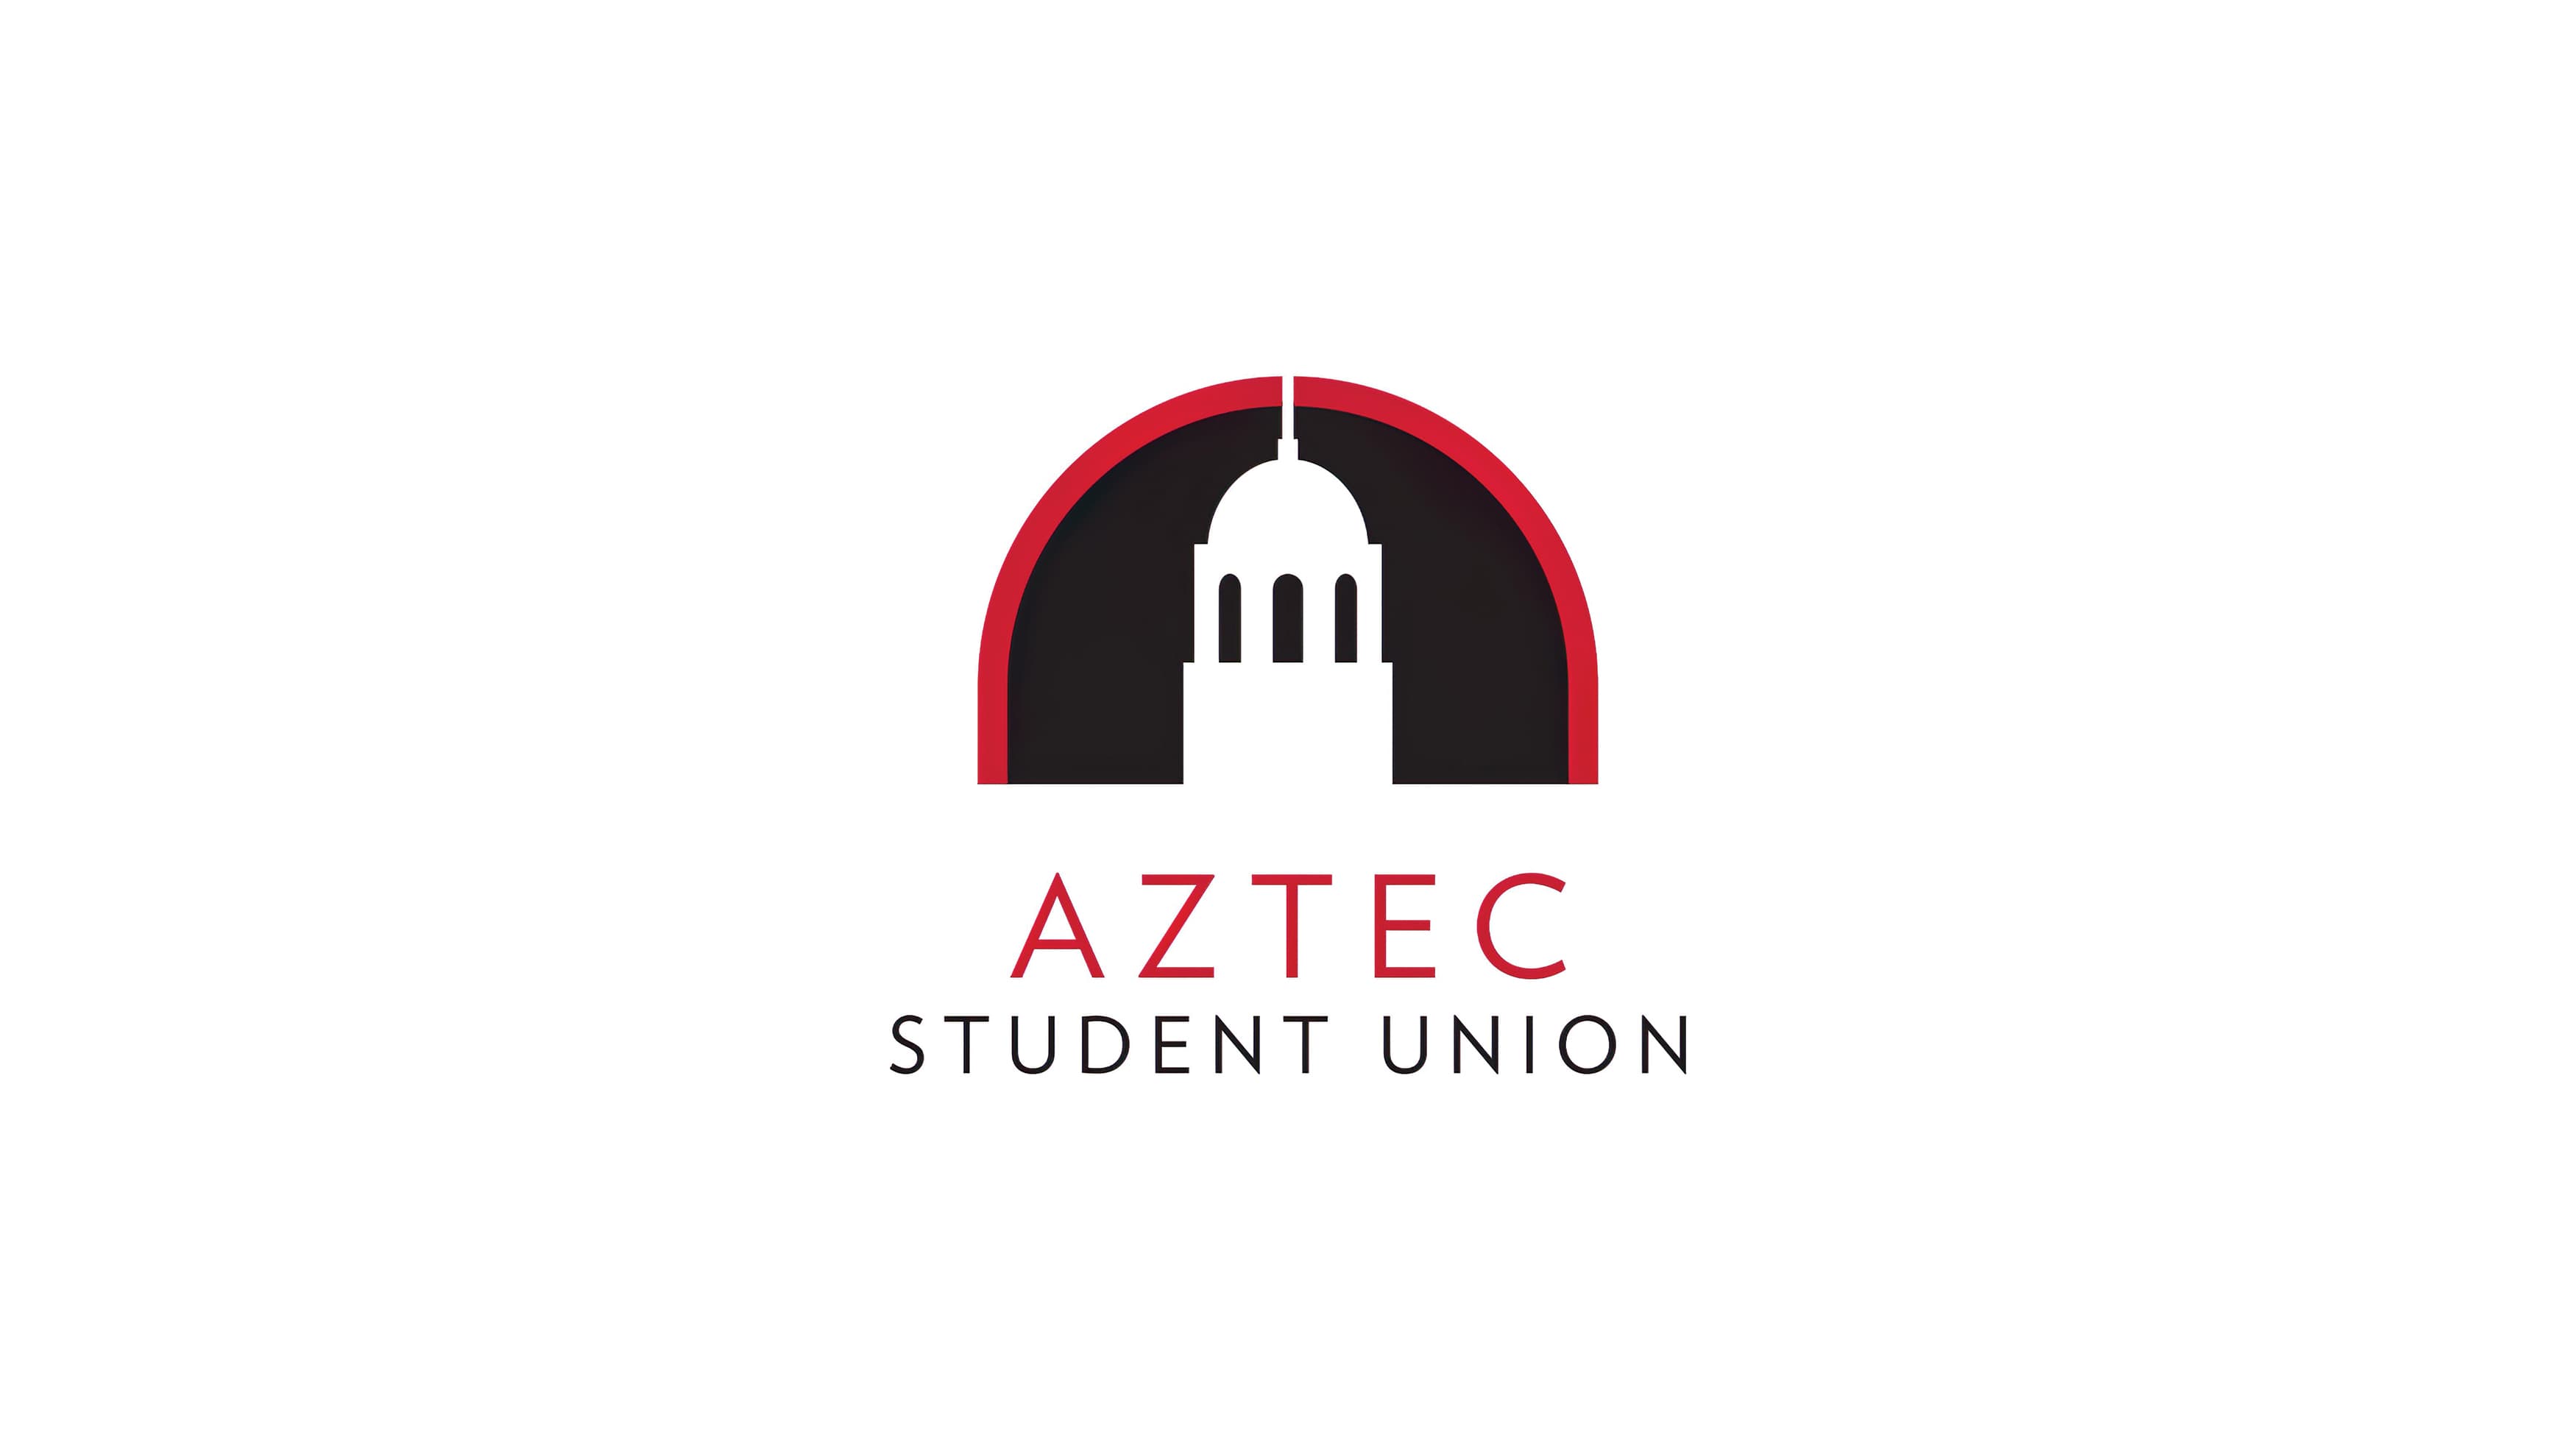 San Diego State University Student Union brand logo and mark